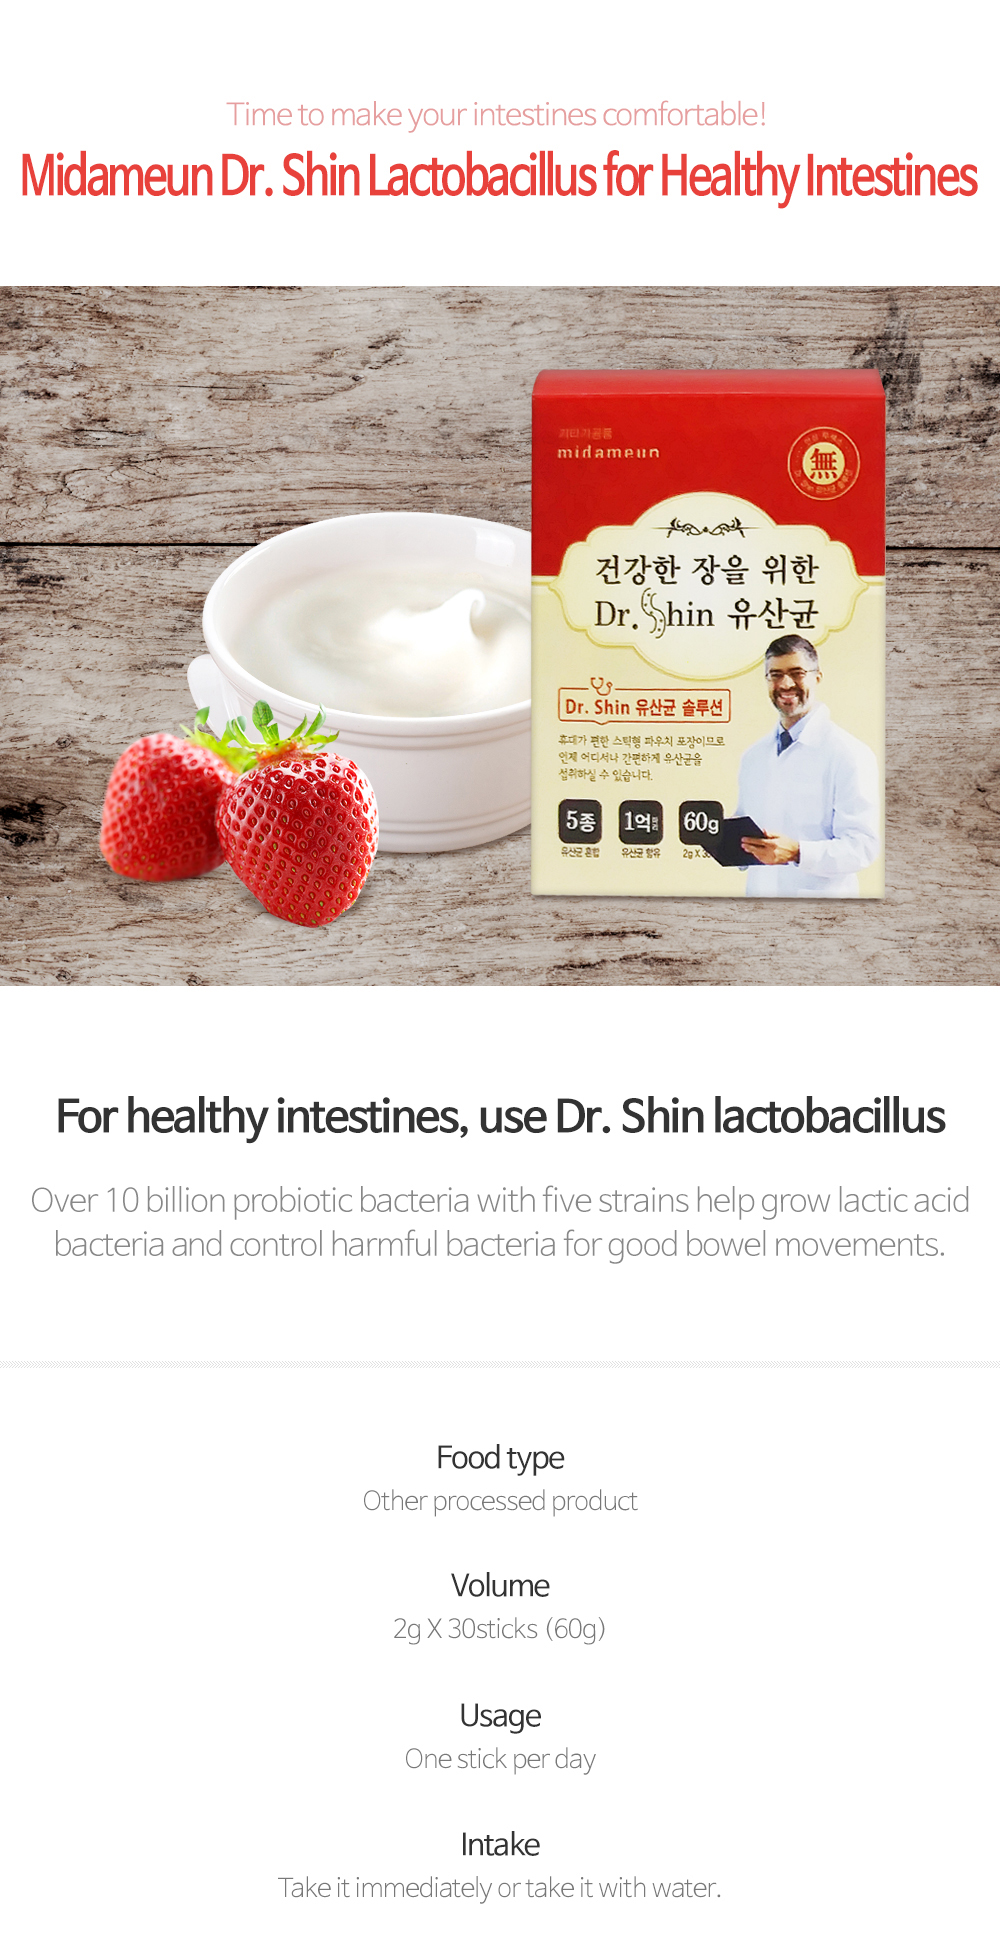 Midameun Dr. Shin Lactobacillus for Healthy Intestines